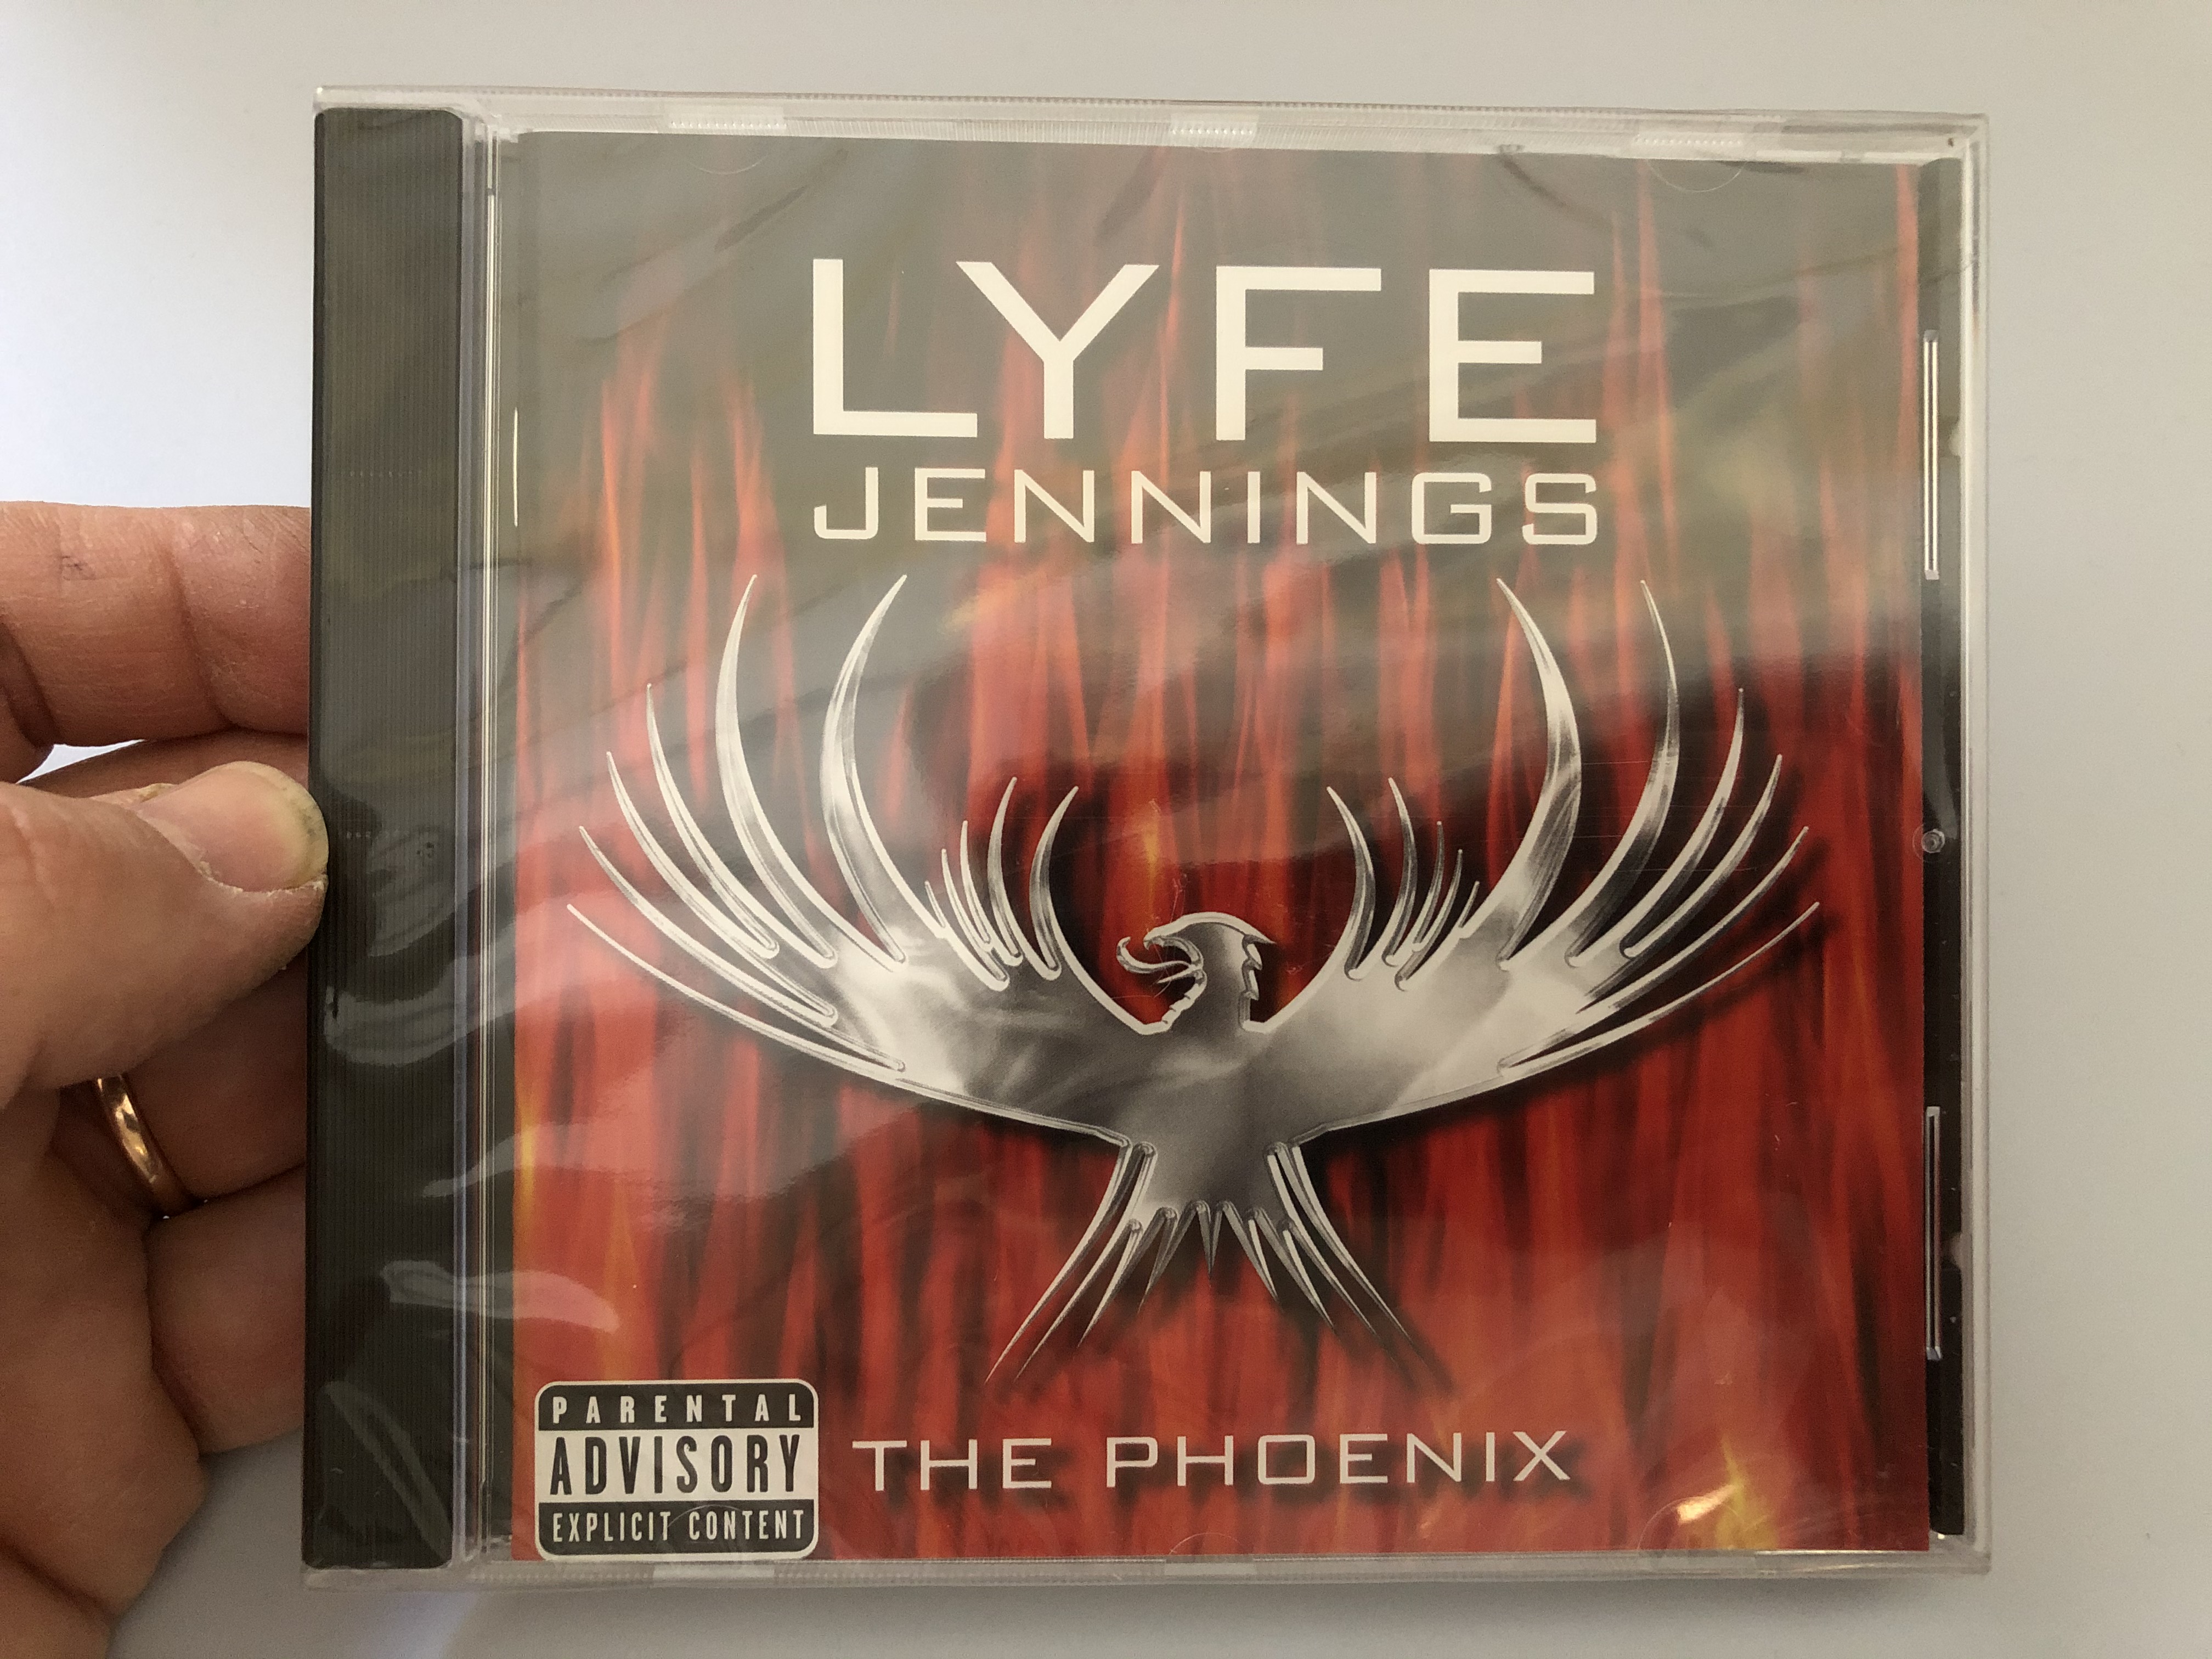 lyfe-jennings-the-phoenix-sony-urban-music-audio-cd-2006-82796-96405-2-1-.jpg